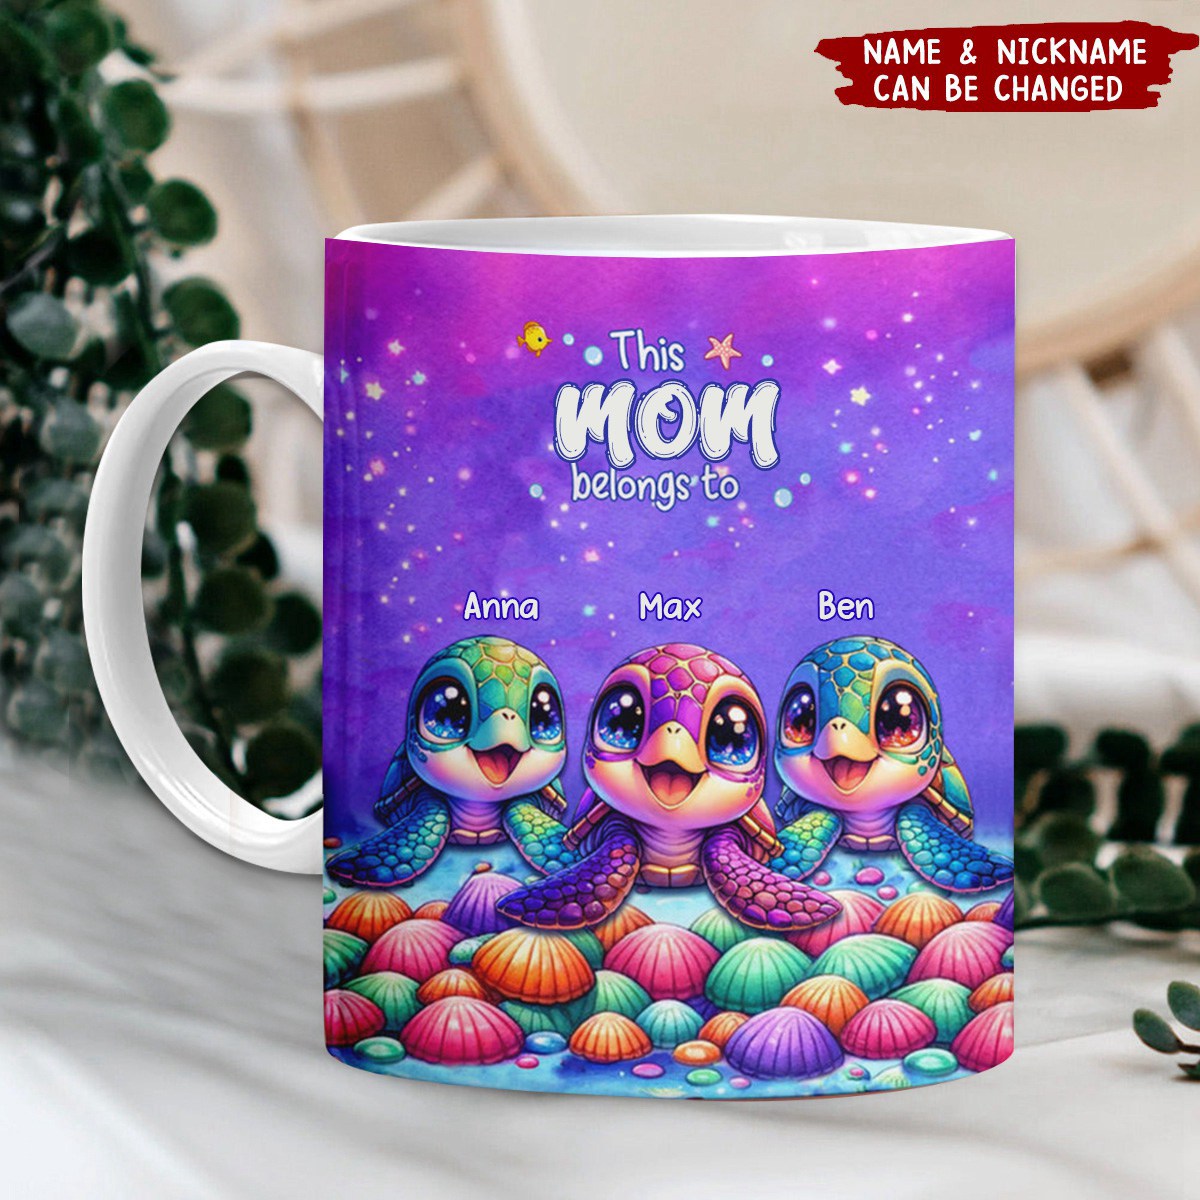 This Grandma belongs to Colorful Turtles Personalized Purple Mug